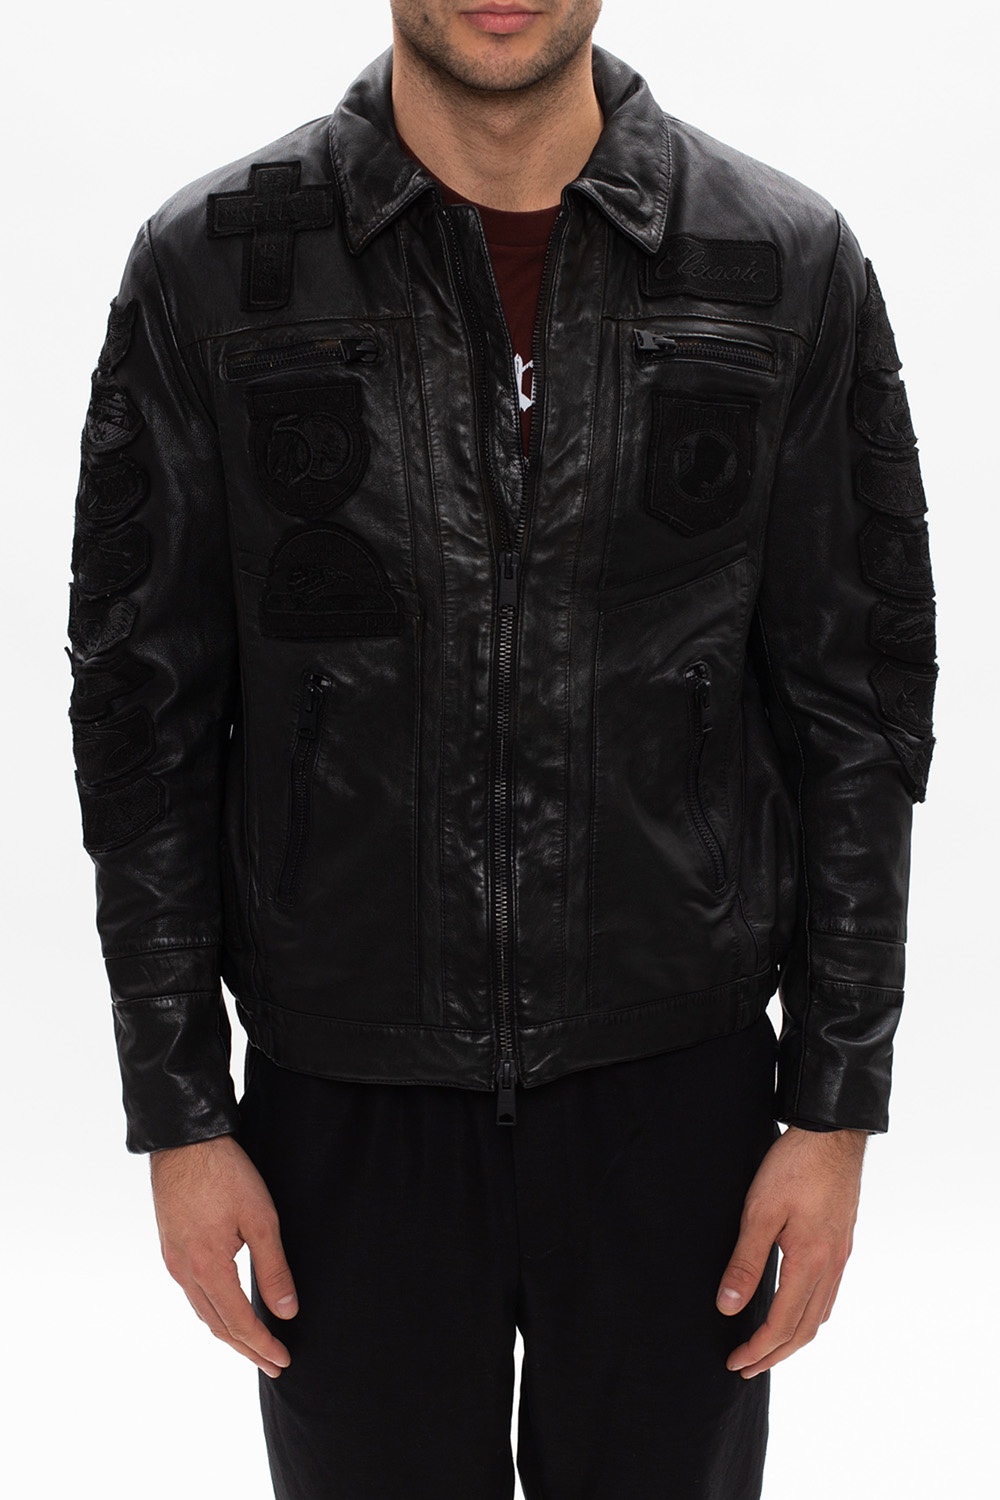 AllSaints ‘Harley’ leather jacket